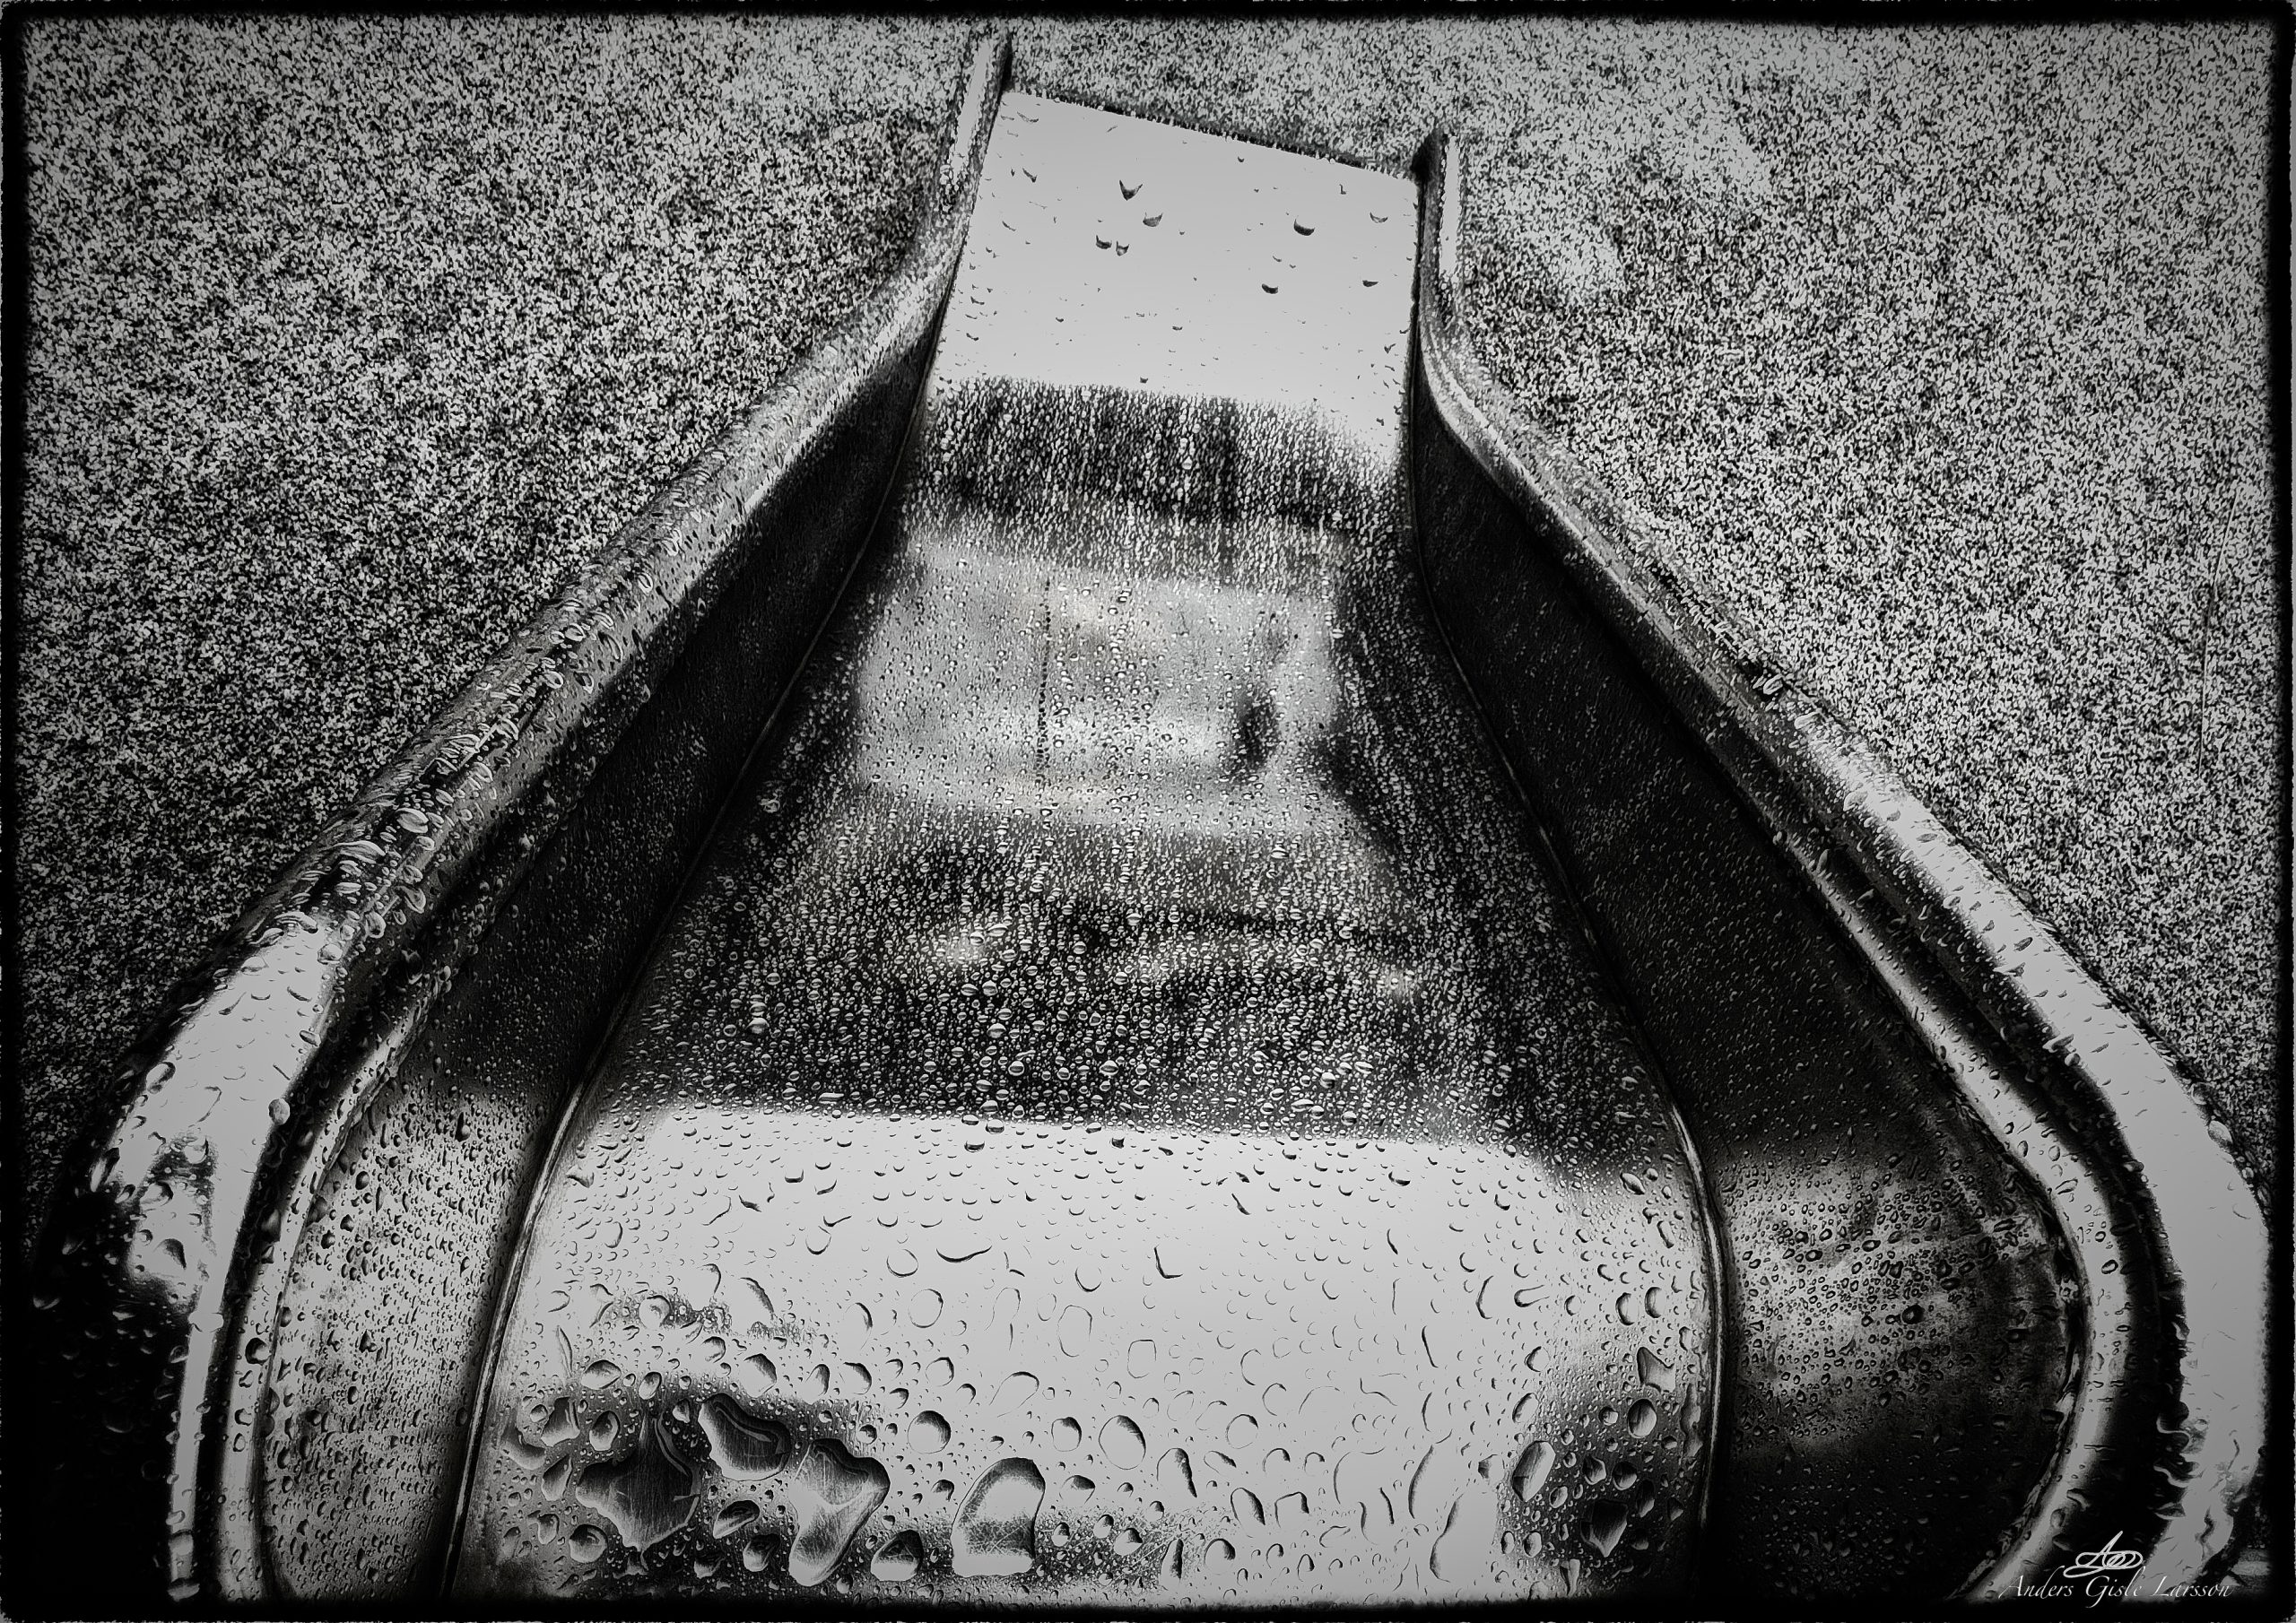 2023-10-03 11.35.38 - Sliding Rain, 276-365, Uge 40, Slotspladsen, Randers - IMG_3143 - ©Anders Gisle Larsson.jpg